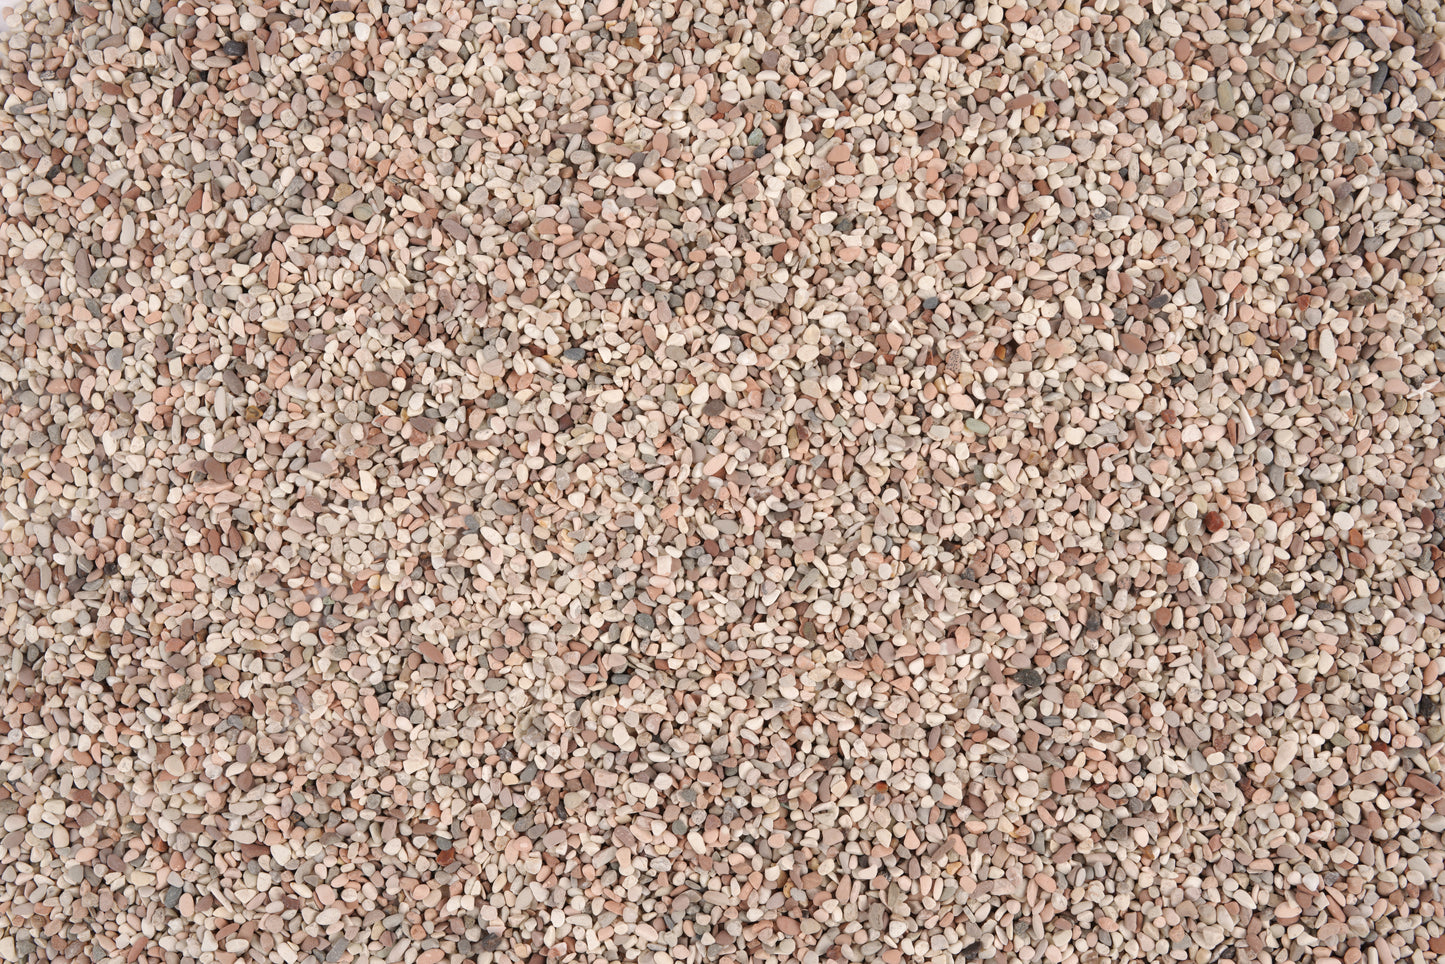 LANDEN Betanu Aquascape Sand,Light Colored Gravel 2-3mm 2L (7lbs)